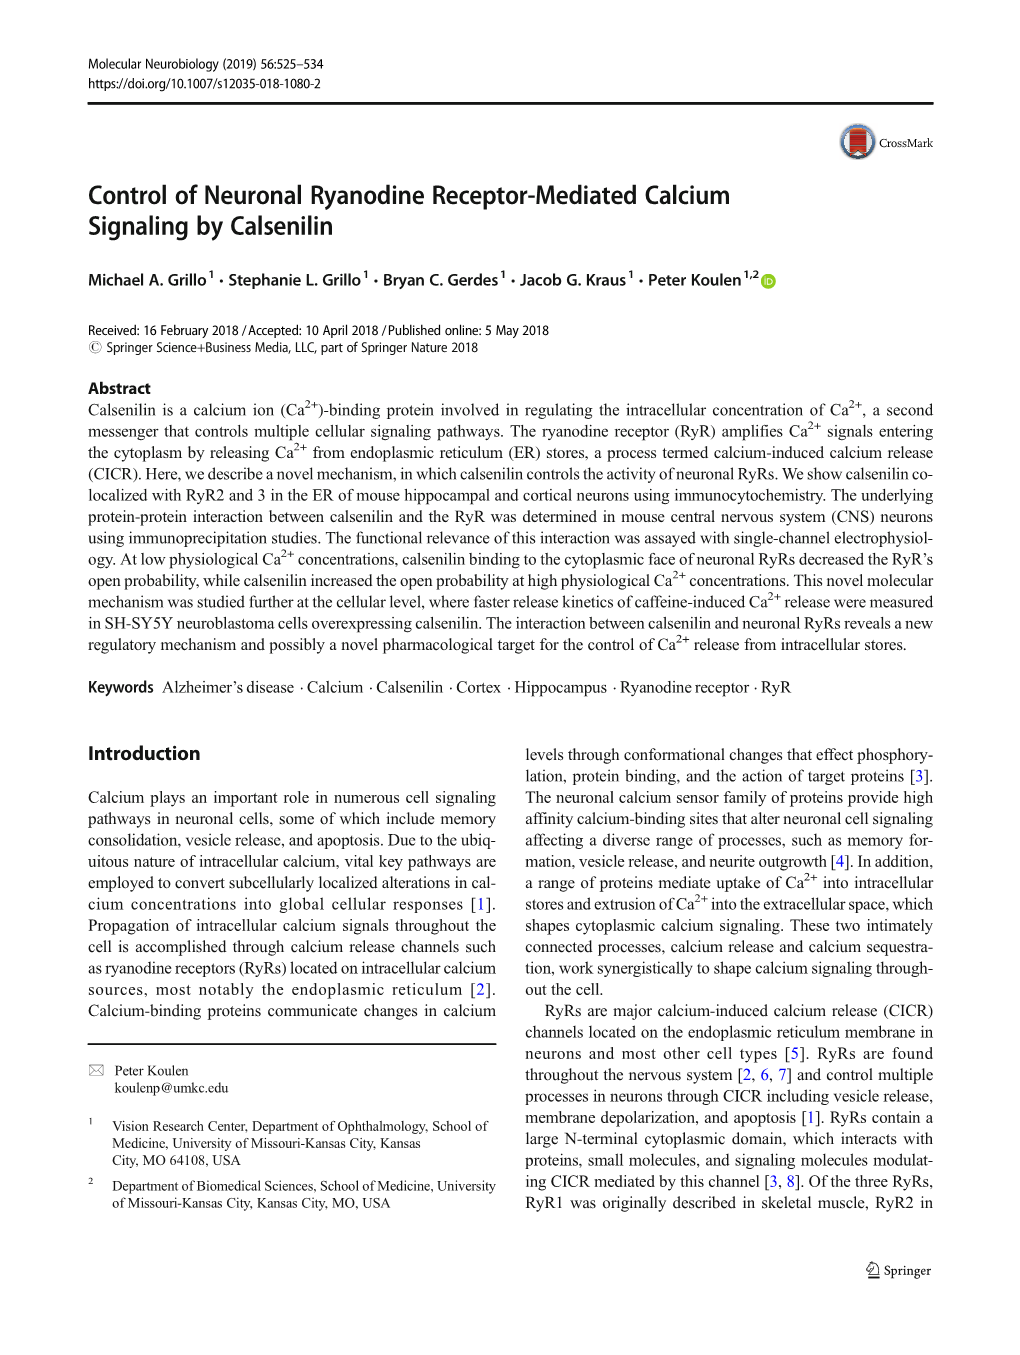 Control of Neuronal Ryanodine Receptor-Mediated Calcium Signaling by Calsenilin